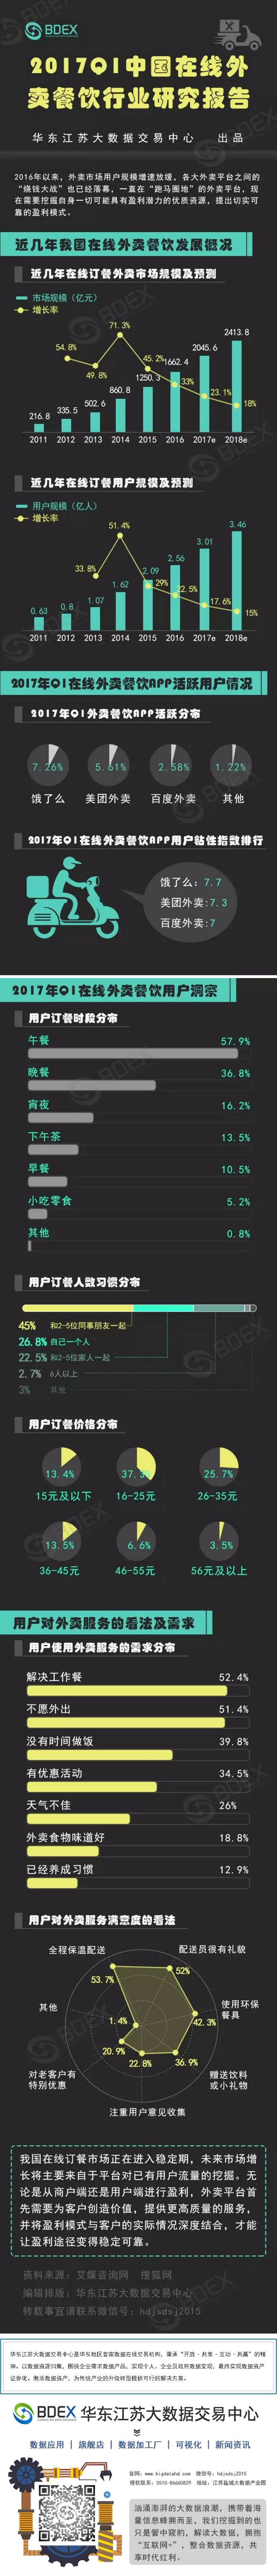 2017Q1中国在线外卖餐饮行业研究报告.png